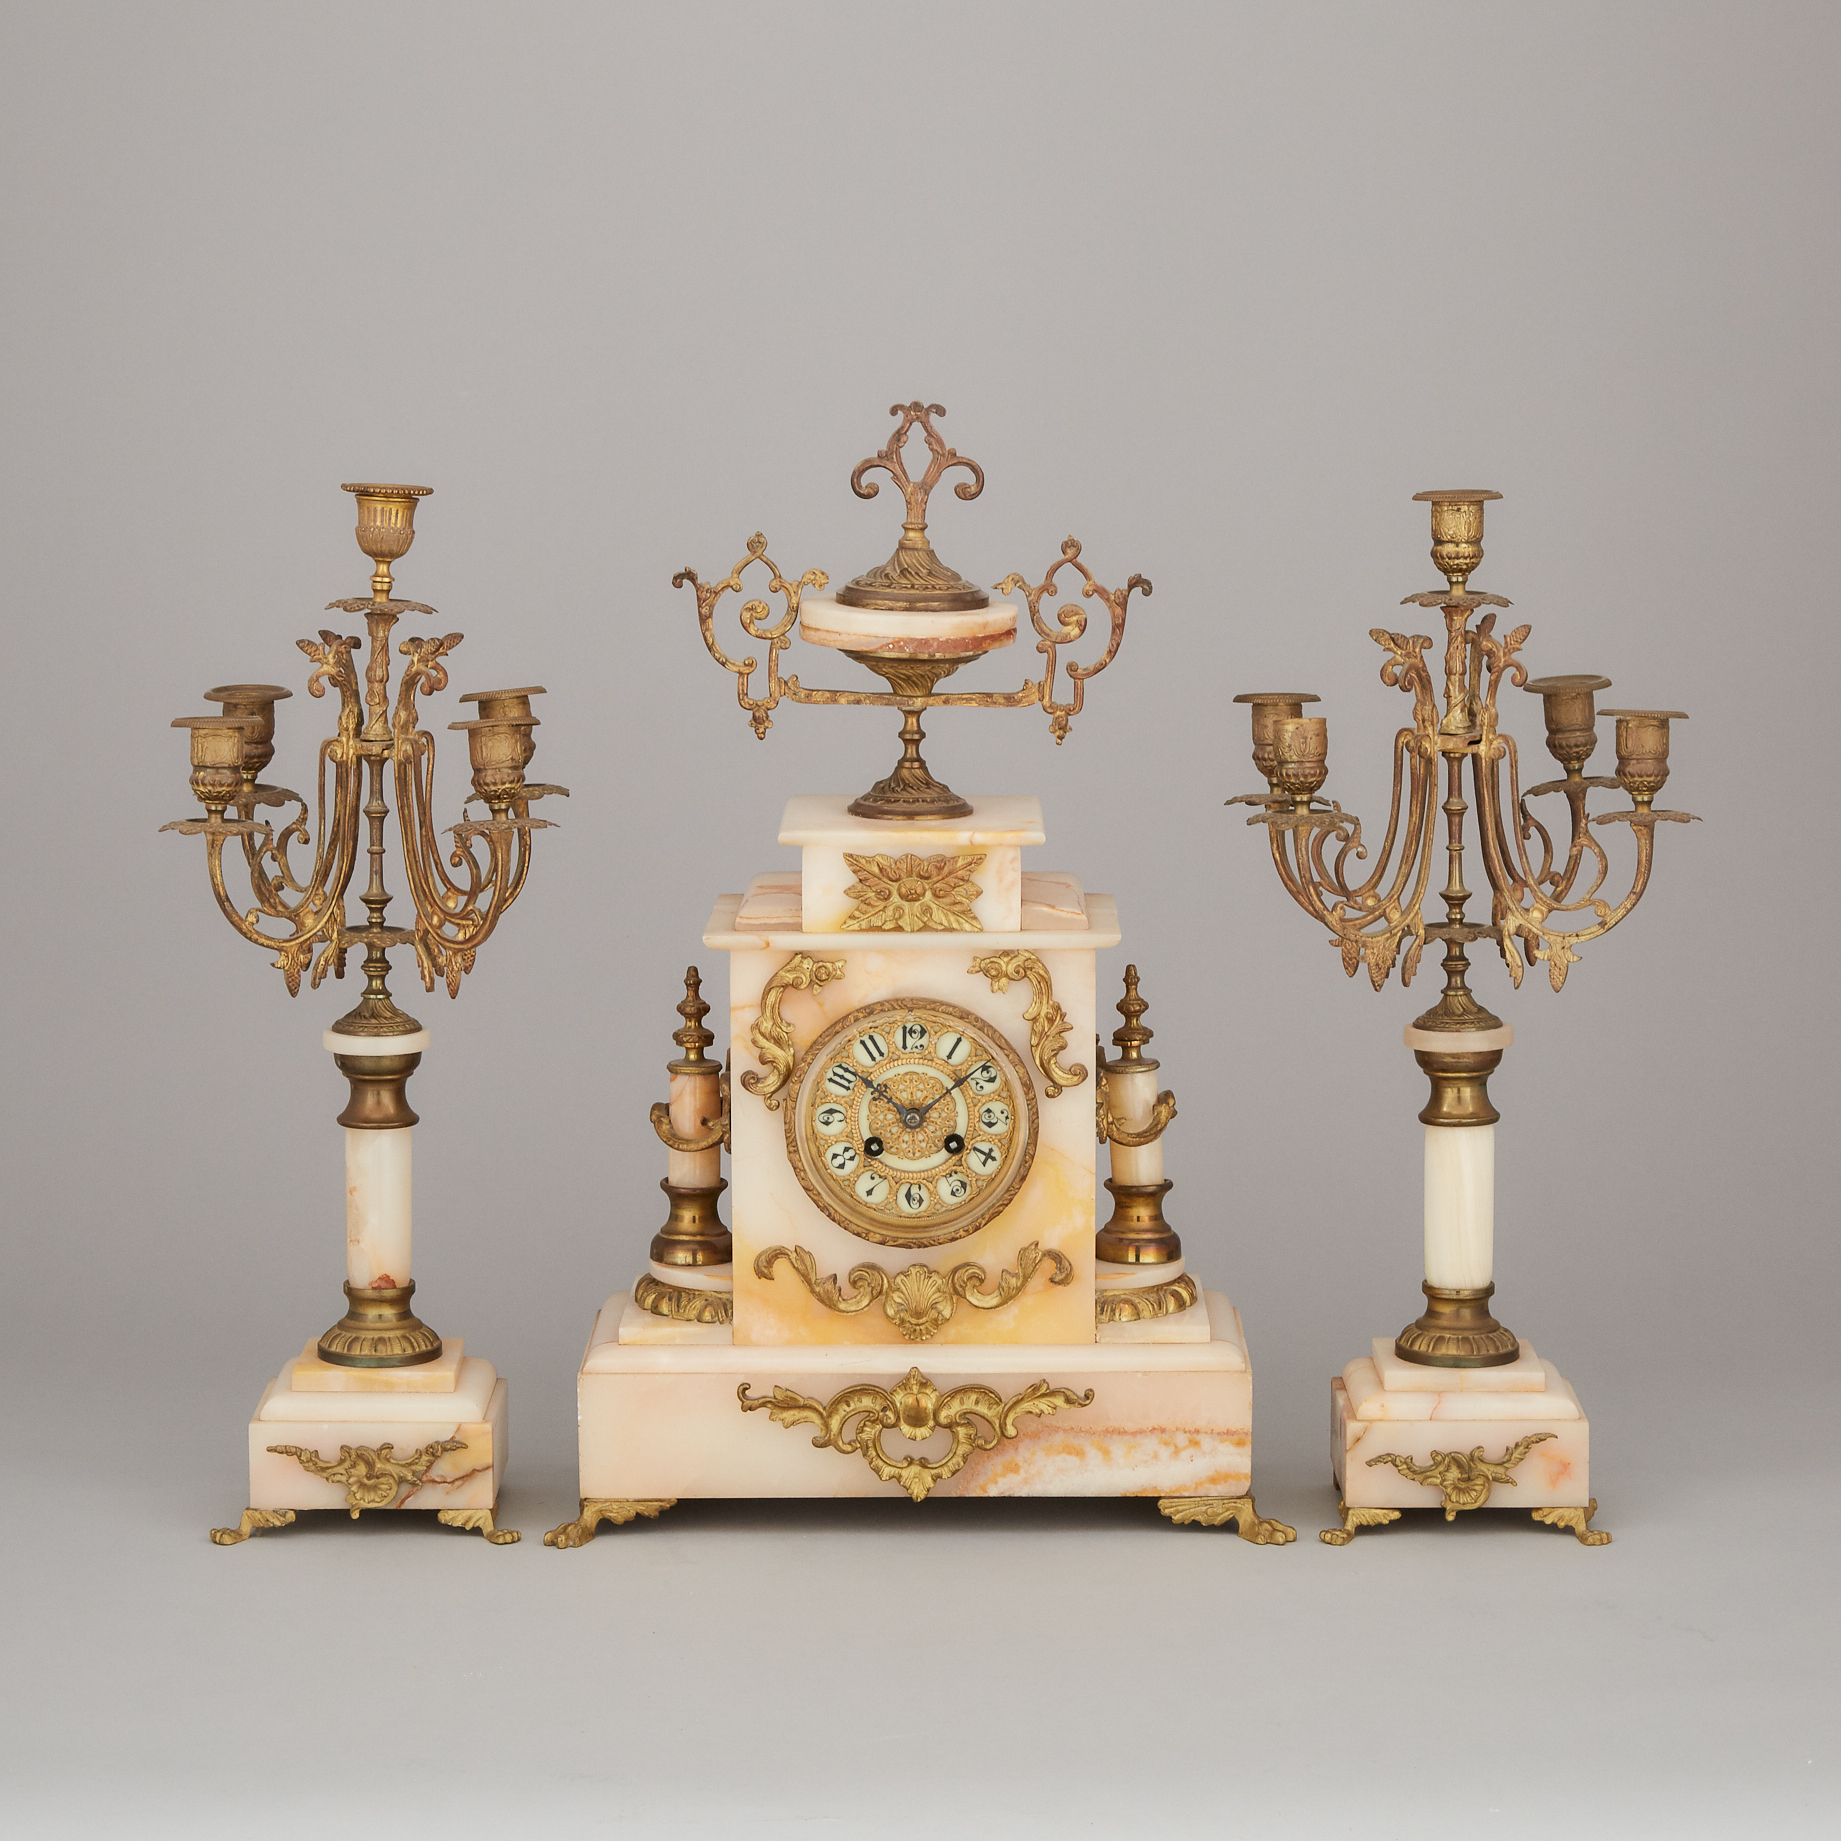 French Ormolu Mounted Onyx Mantel Clock Garniture, late 19th century